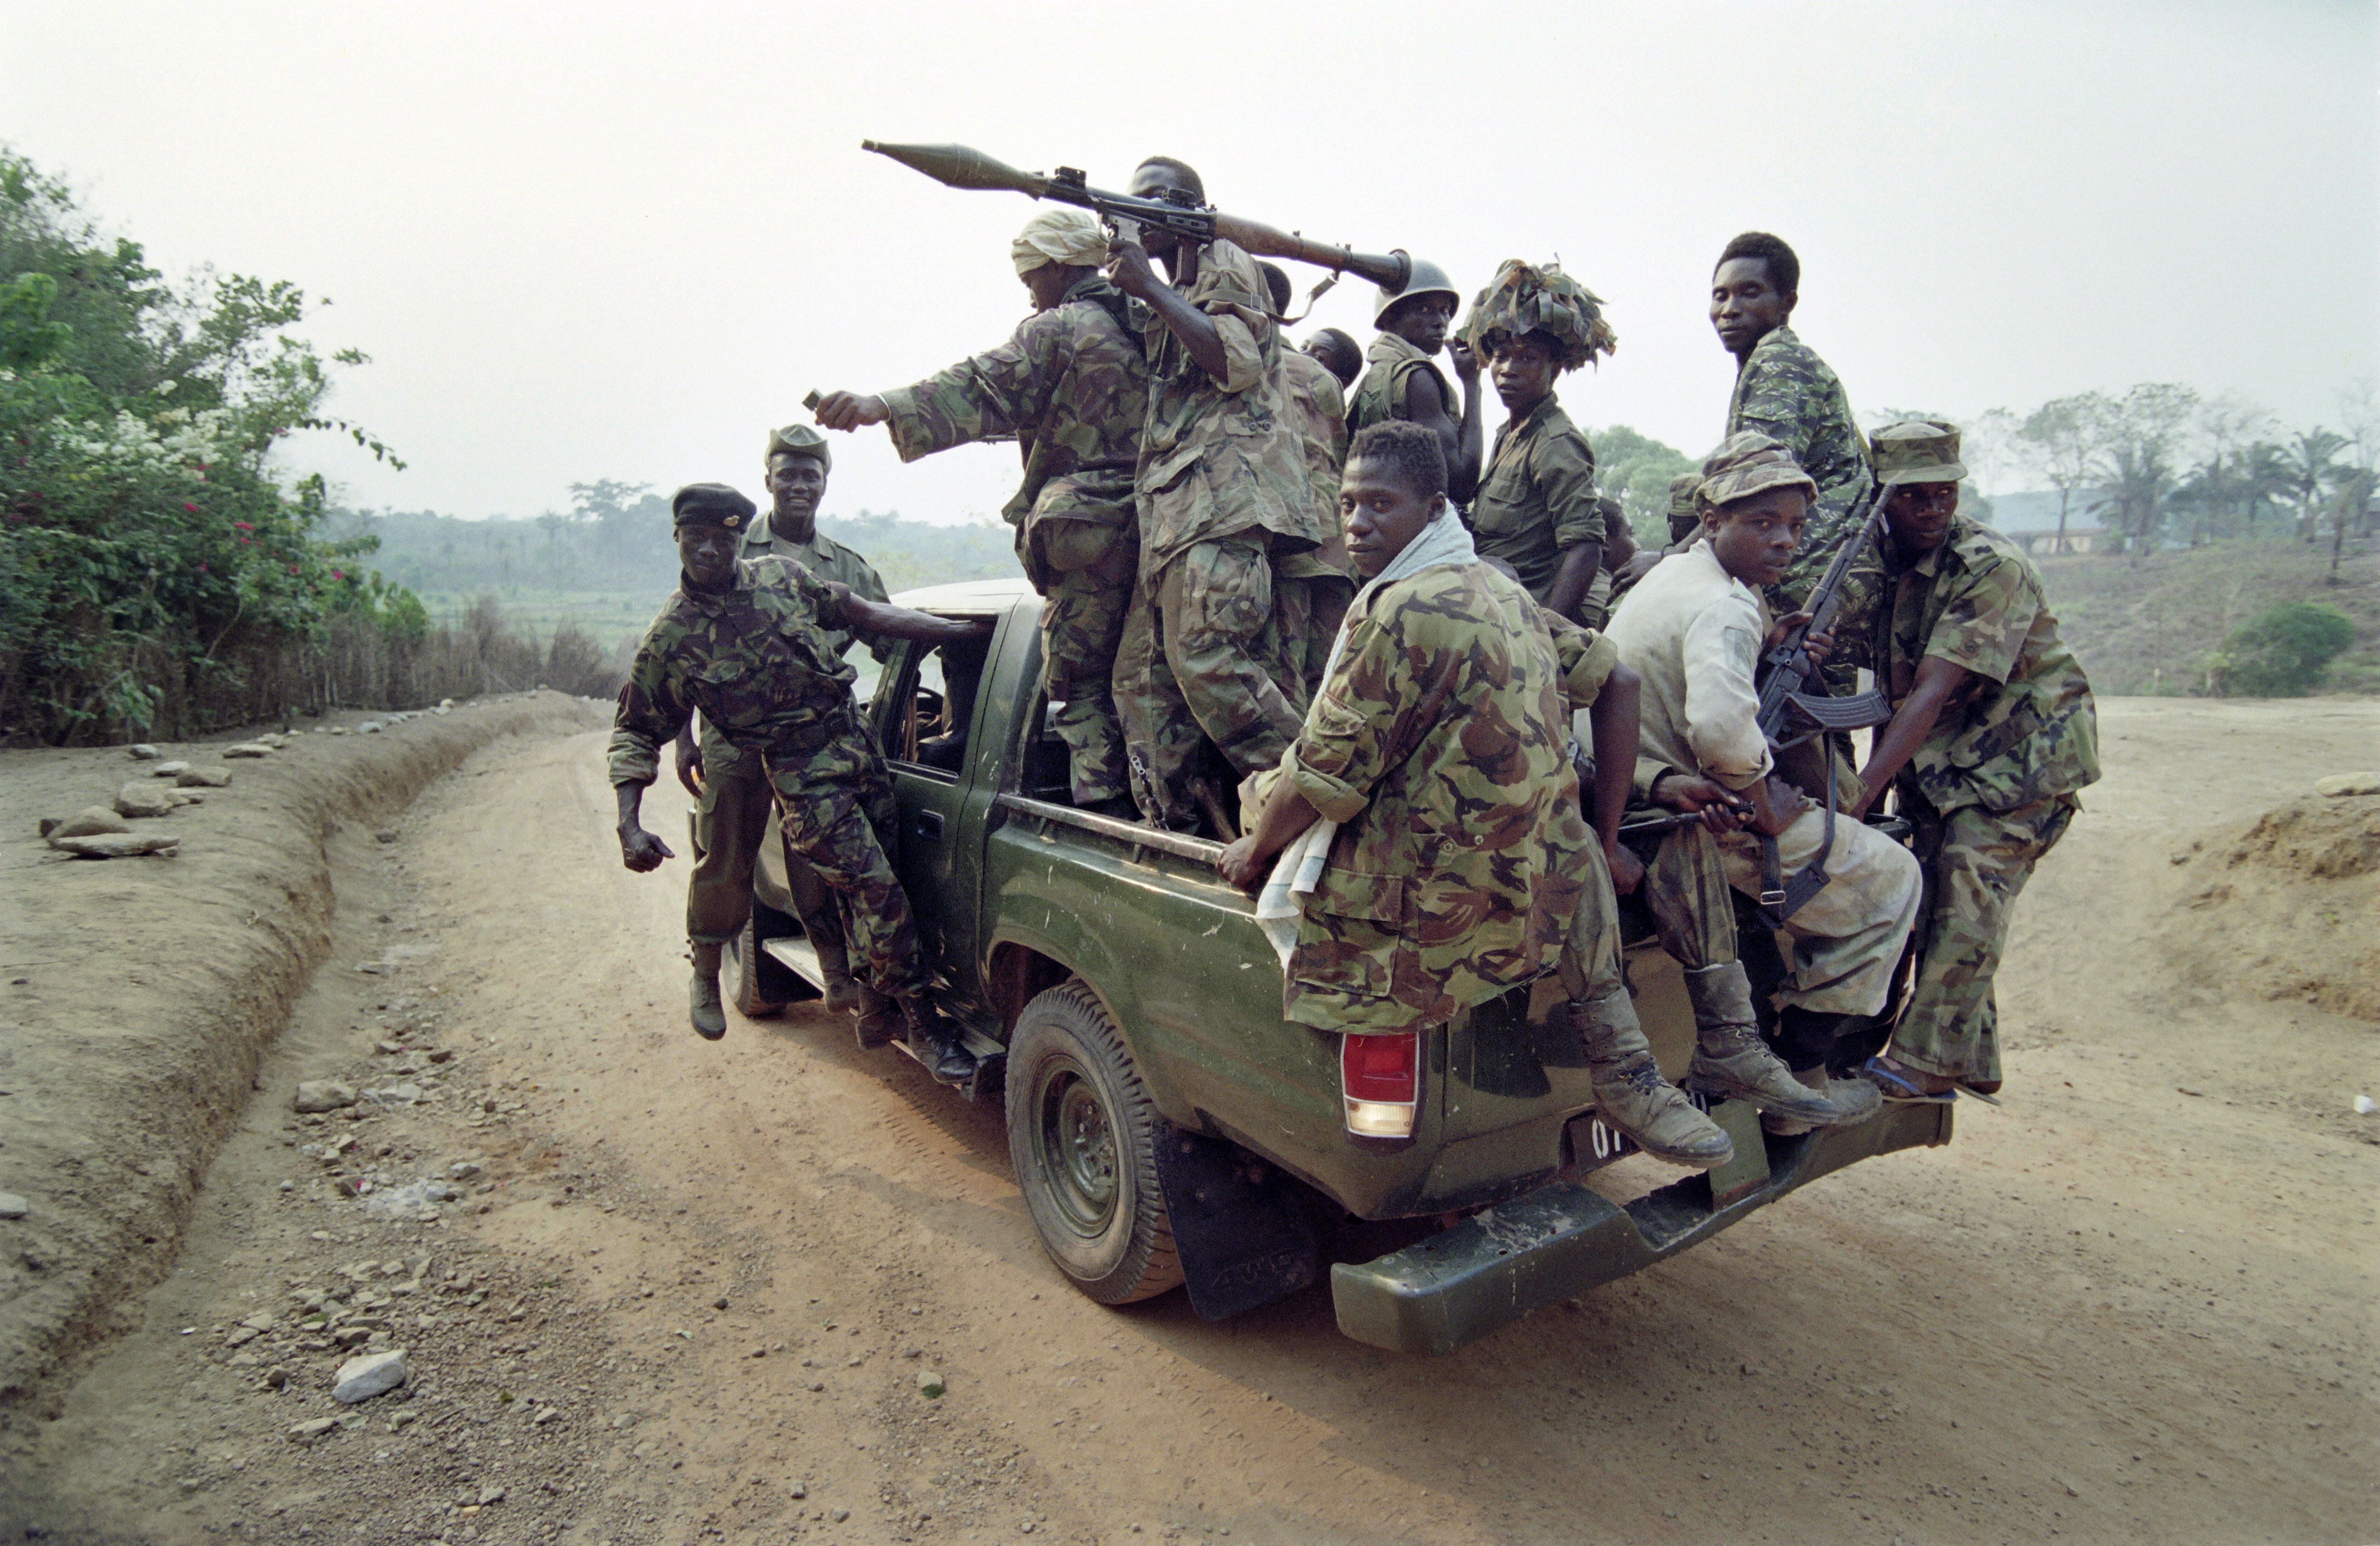 Tens of thousands were killed in decade-long Sierra Leone civil war